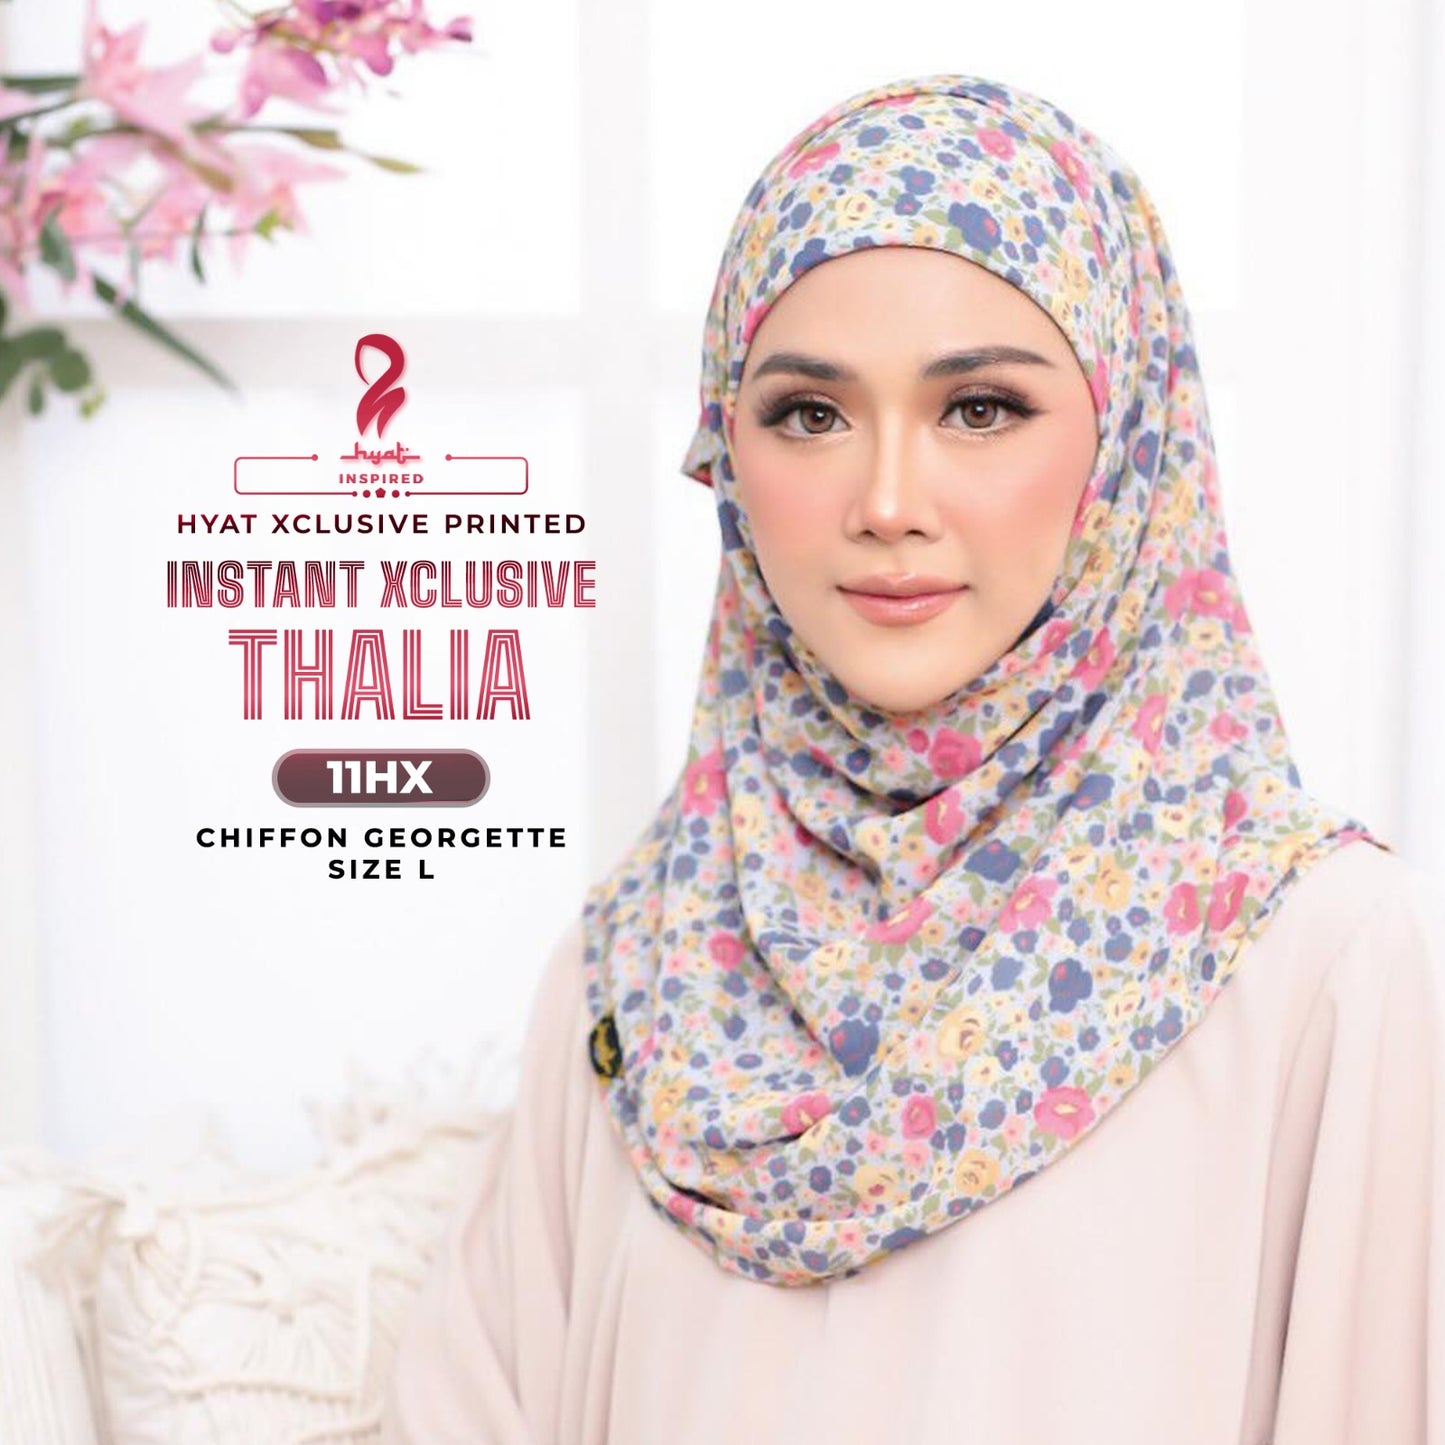 Hyat Hijab Inspired Hyatti Raya Xclusive Collection With Box (9-12HX)